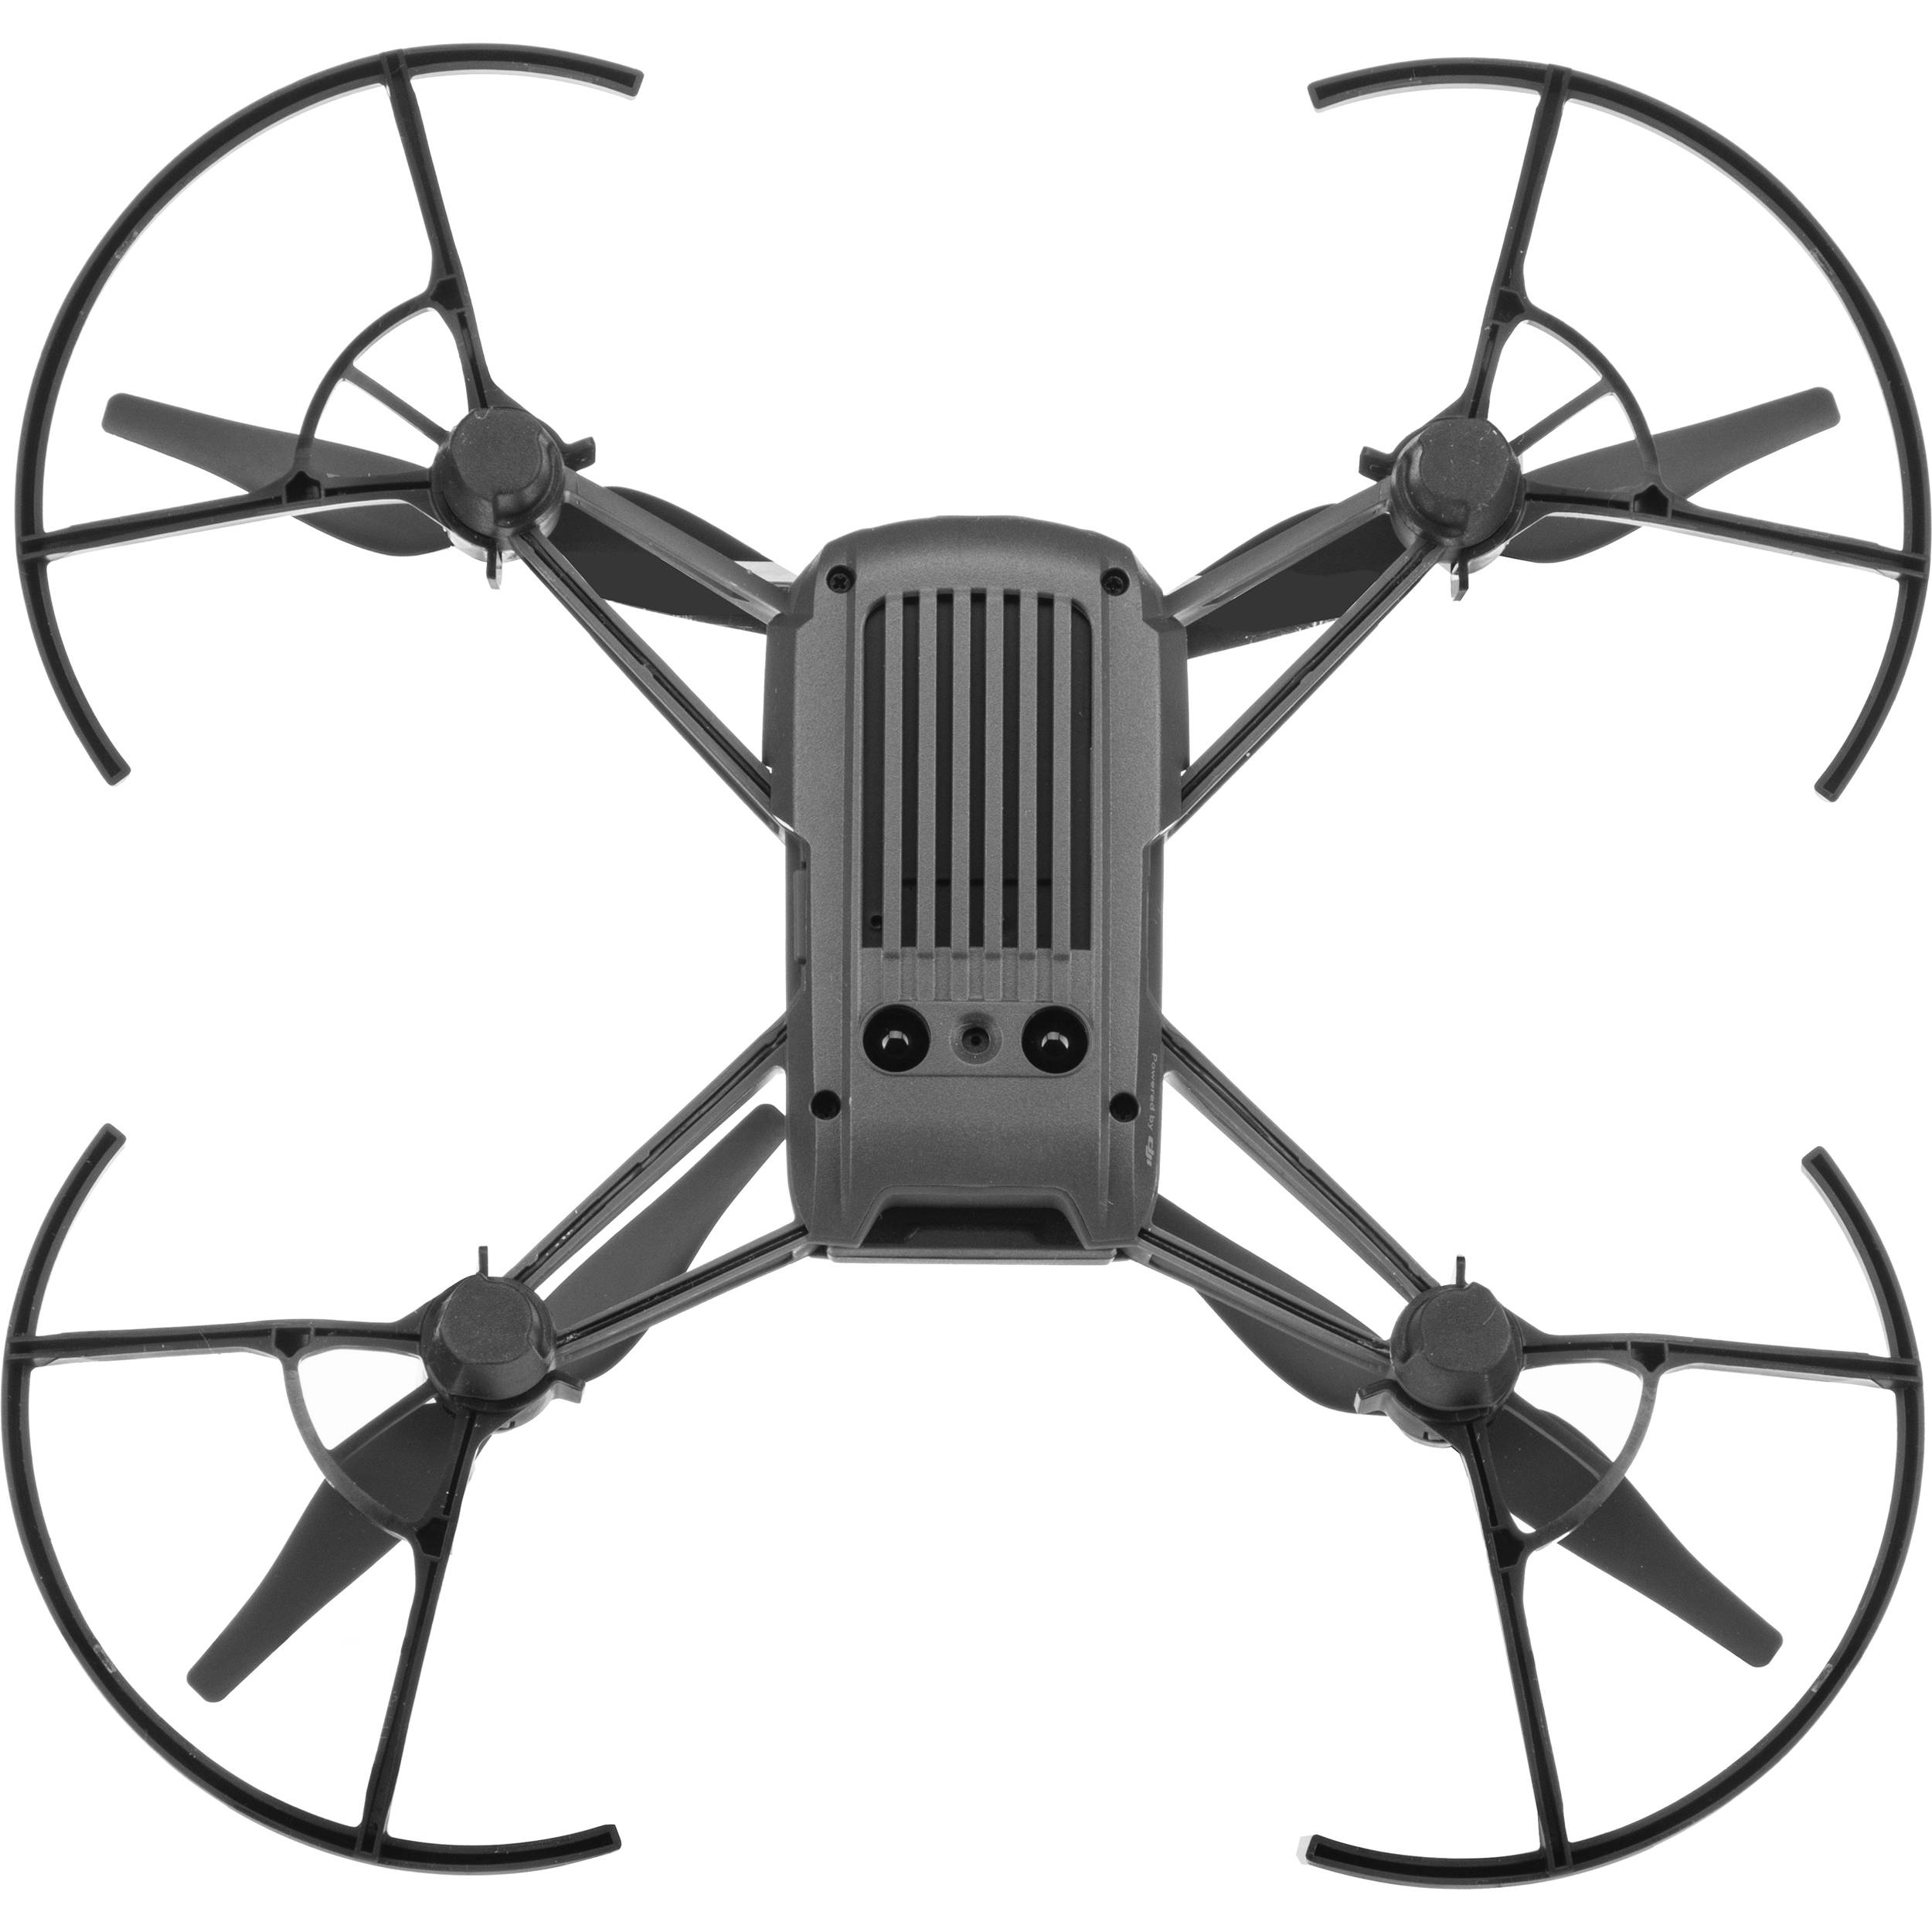 Ryze Tech Tello Quadcopter par DJI